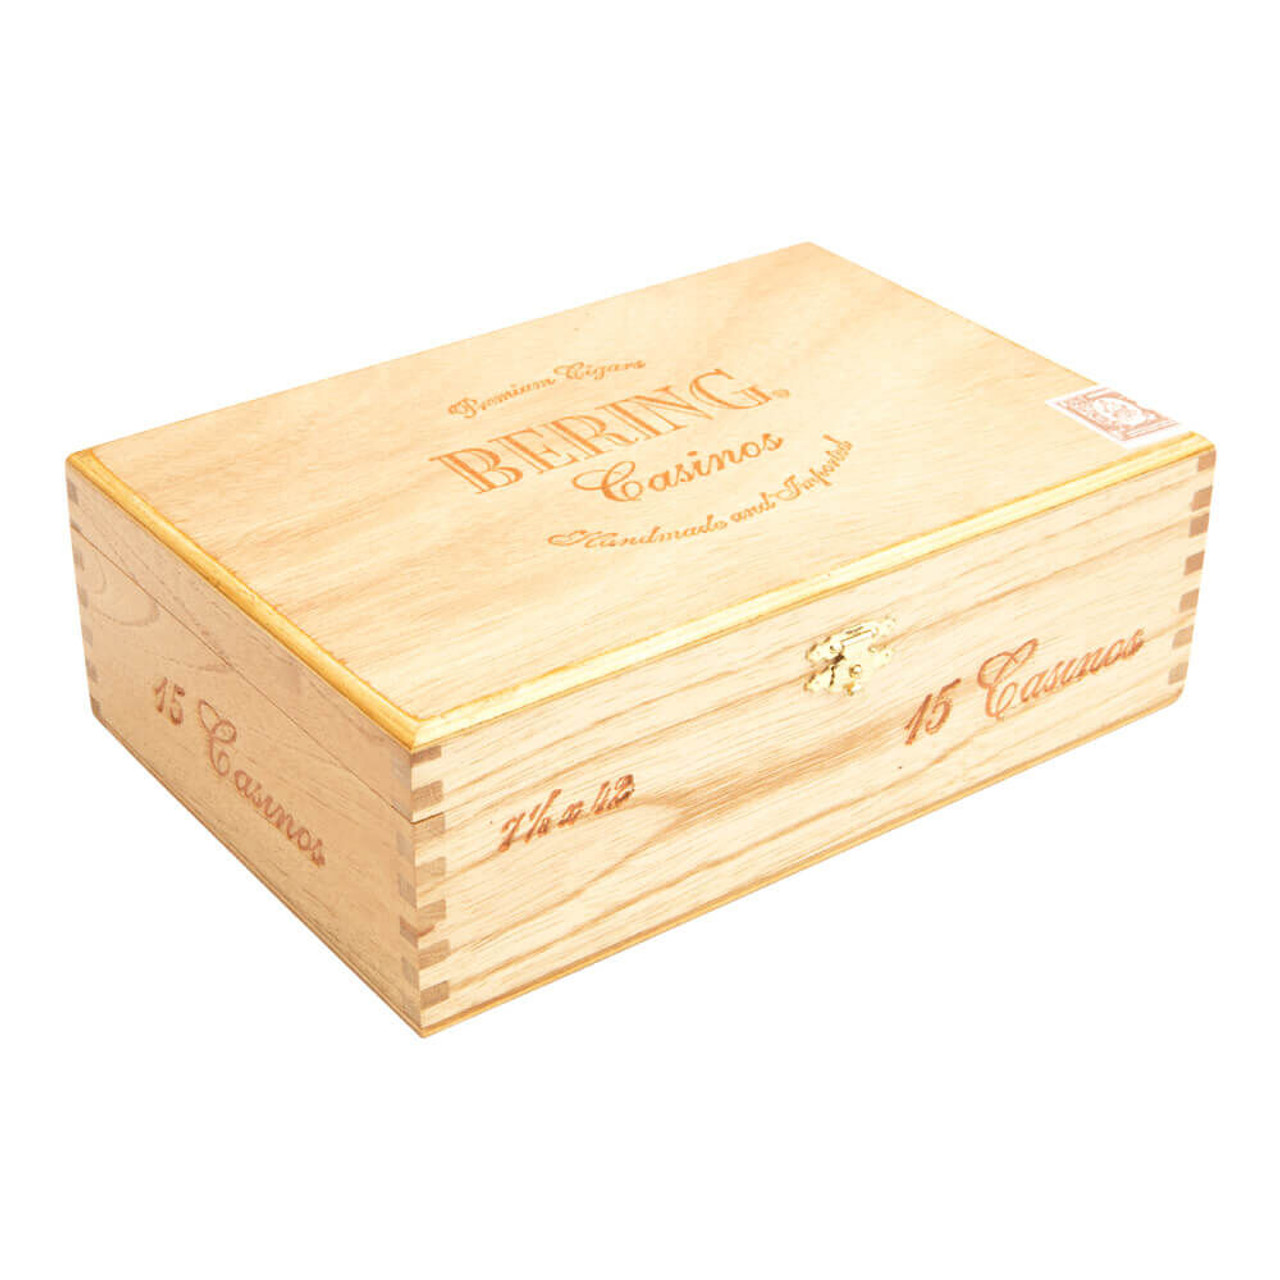 Bering Casinos Glass Tubes Natural Cigars - 7.12 x 44 (Box of 15) *Box